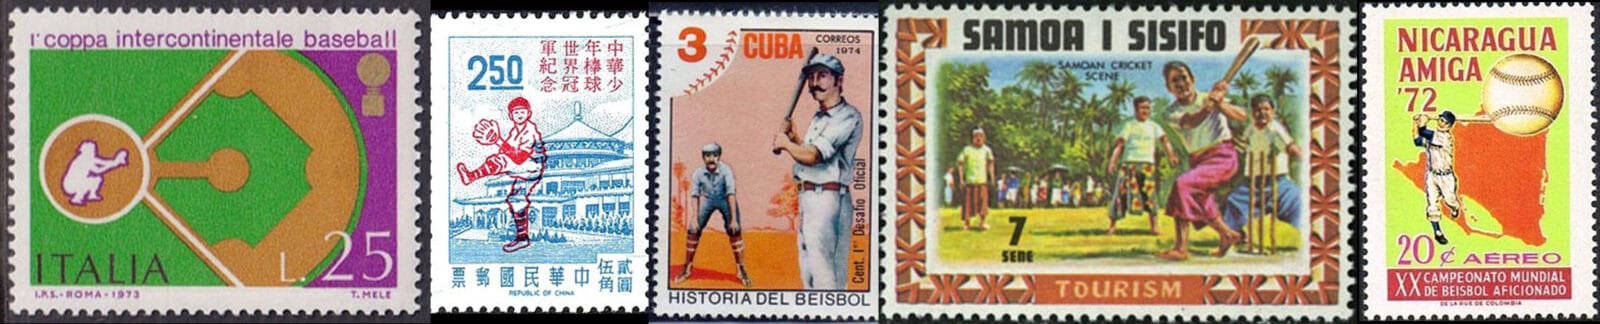 International Baseball Postage Stamps (1970 to 1979)